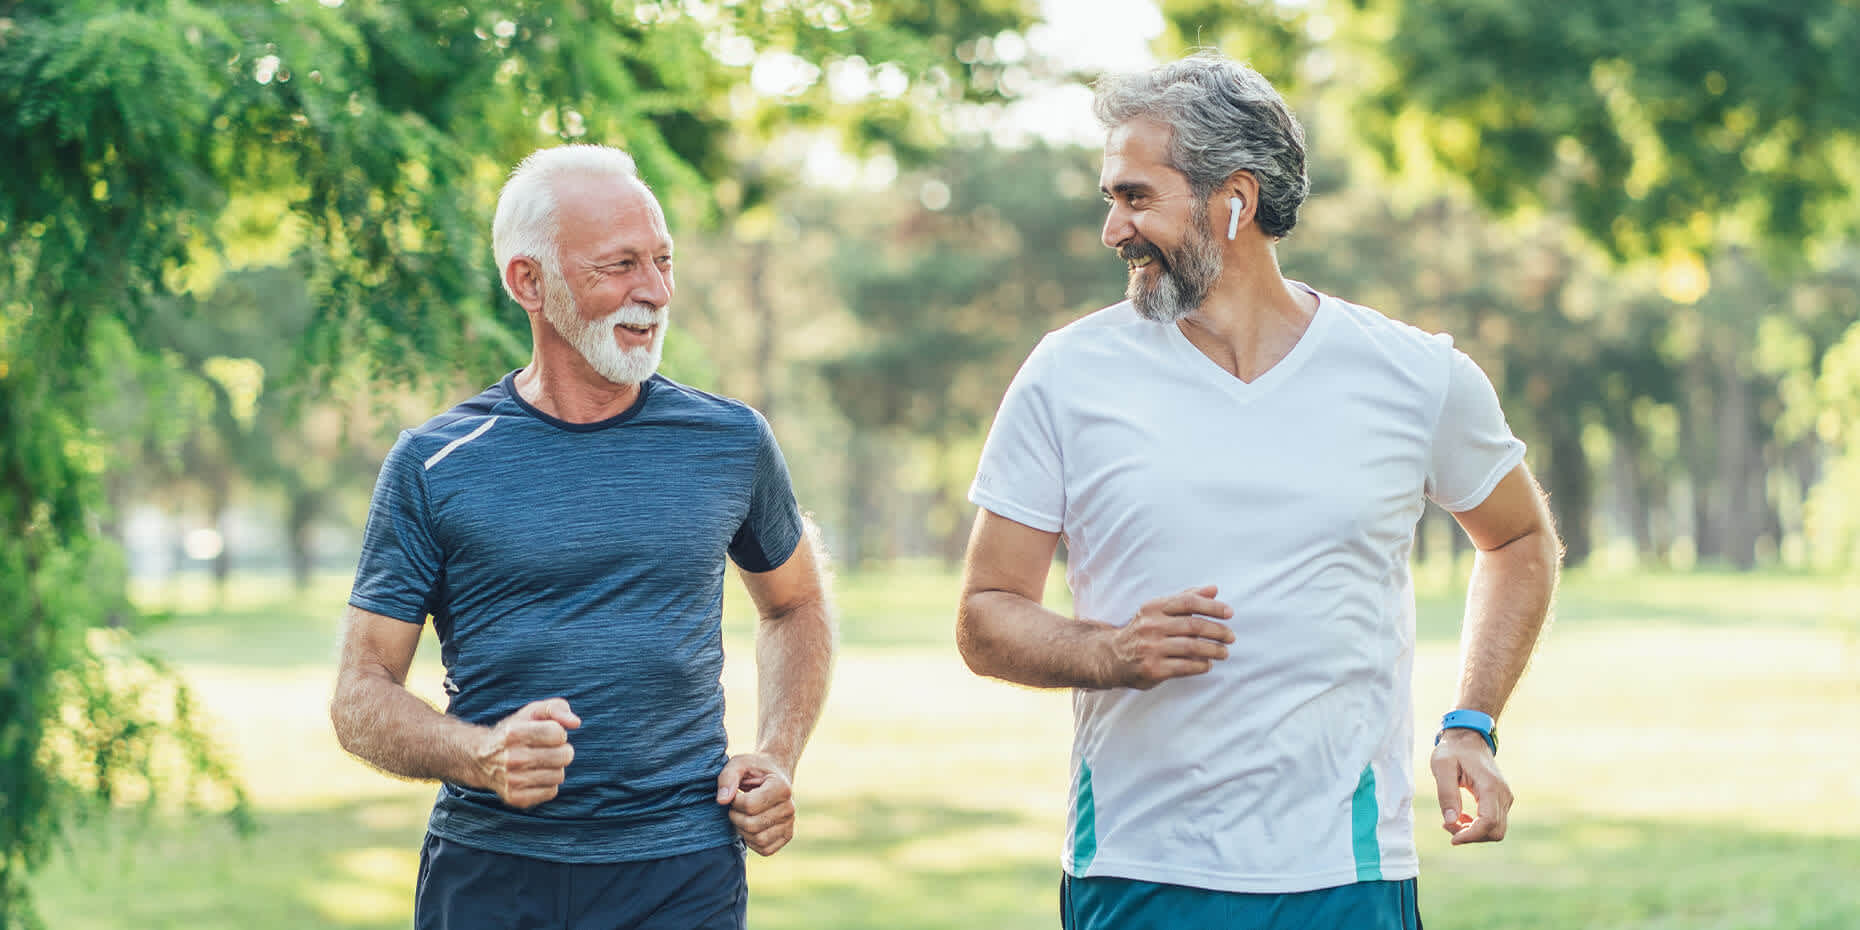 Two aging men jogging together